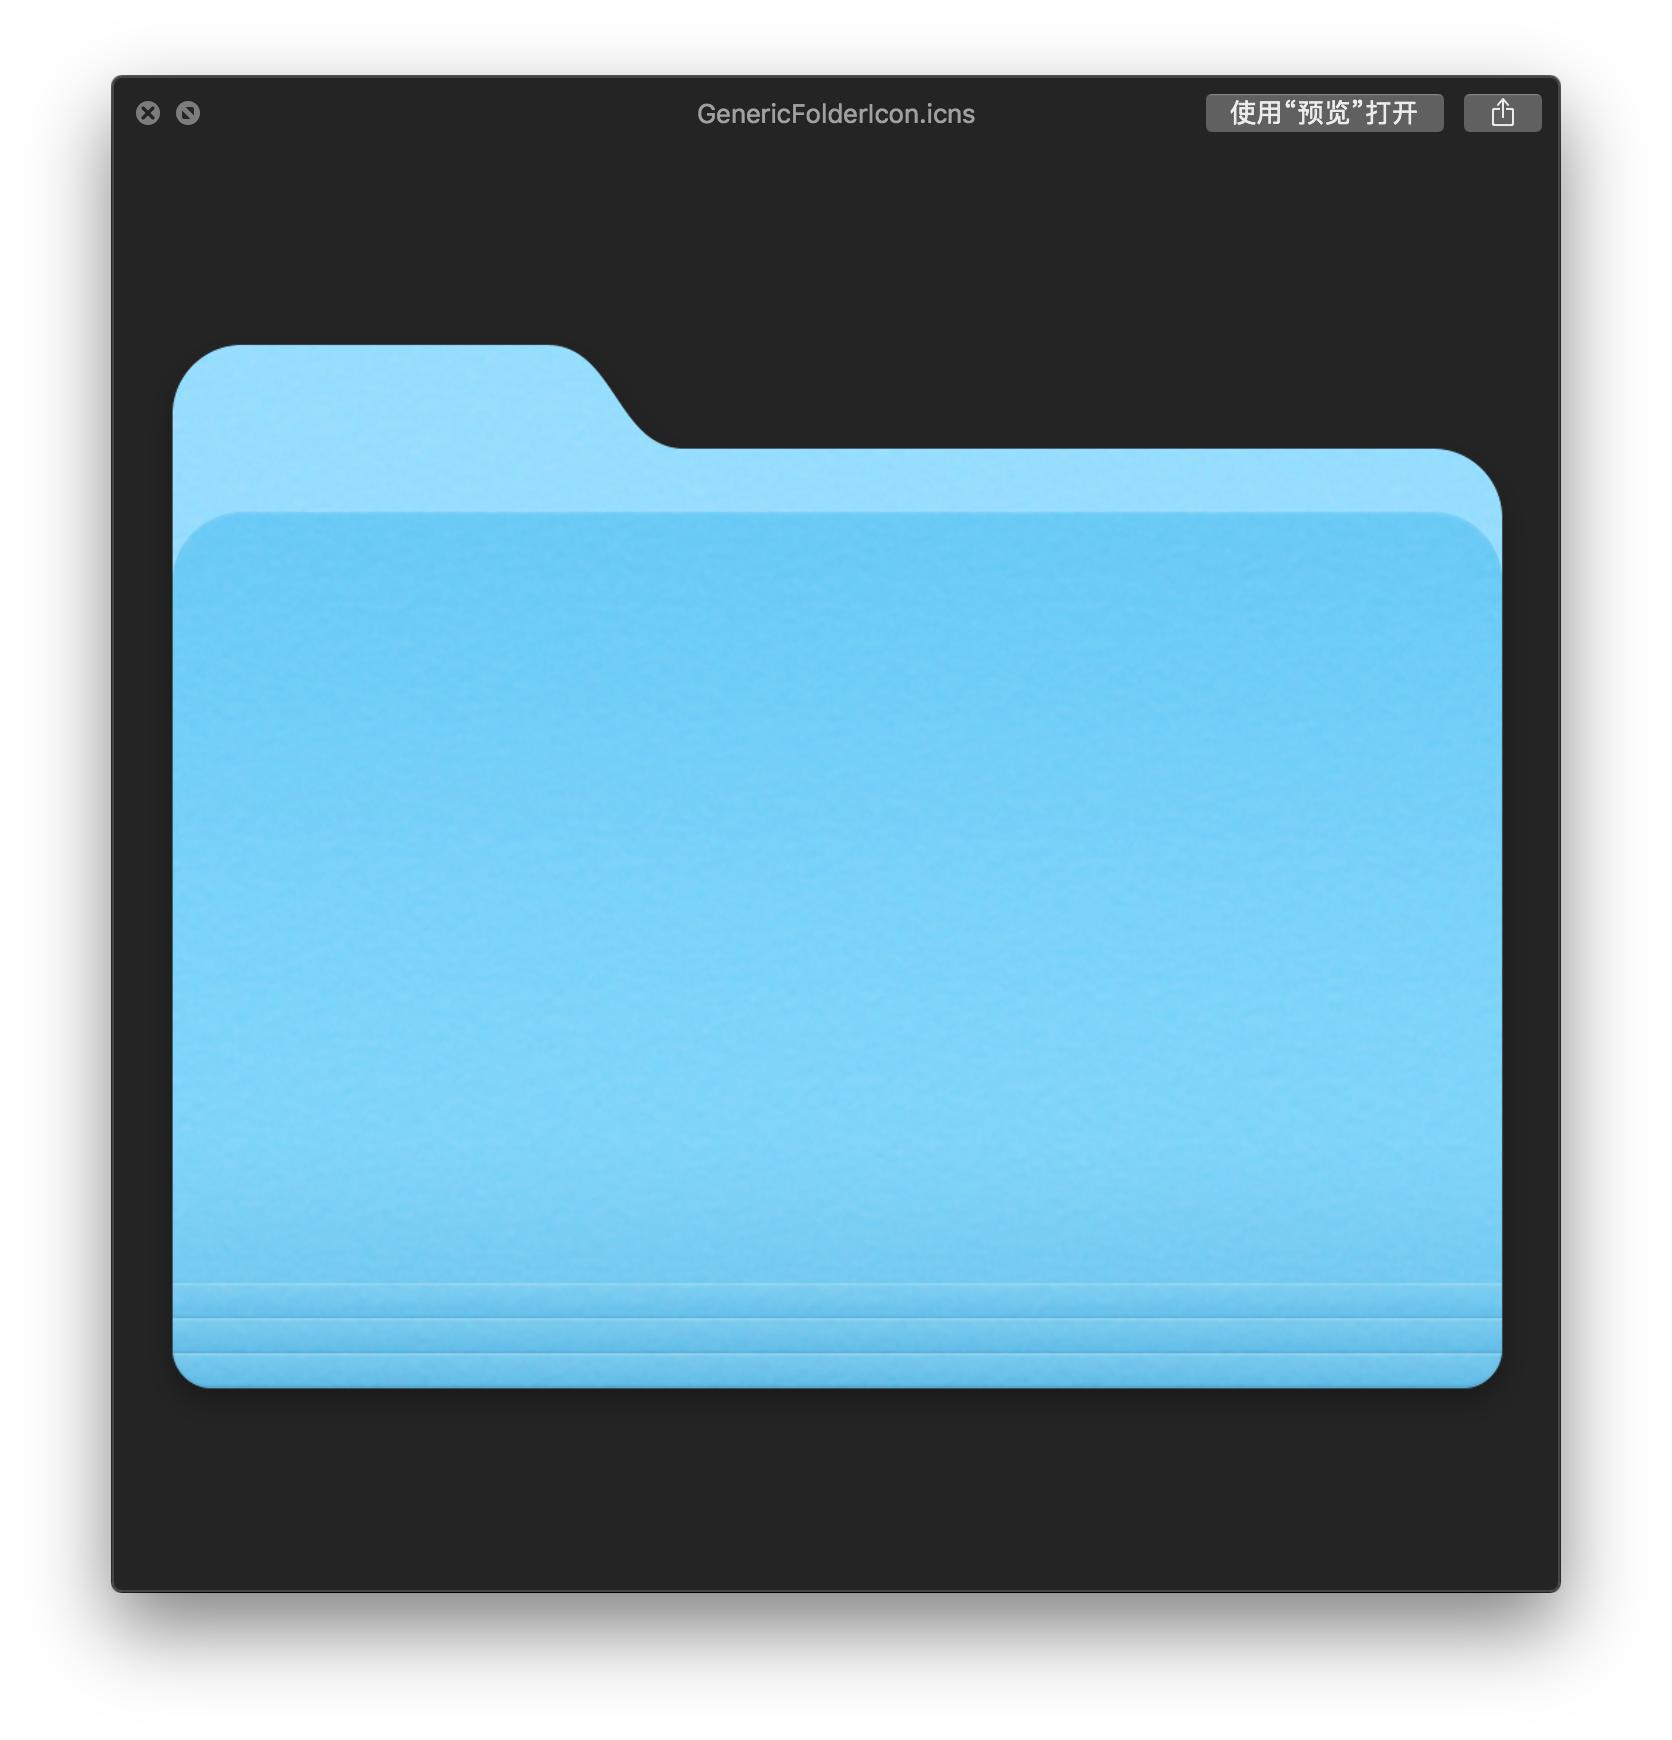 mac folder icon download